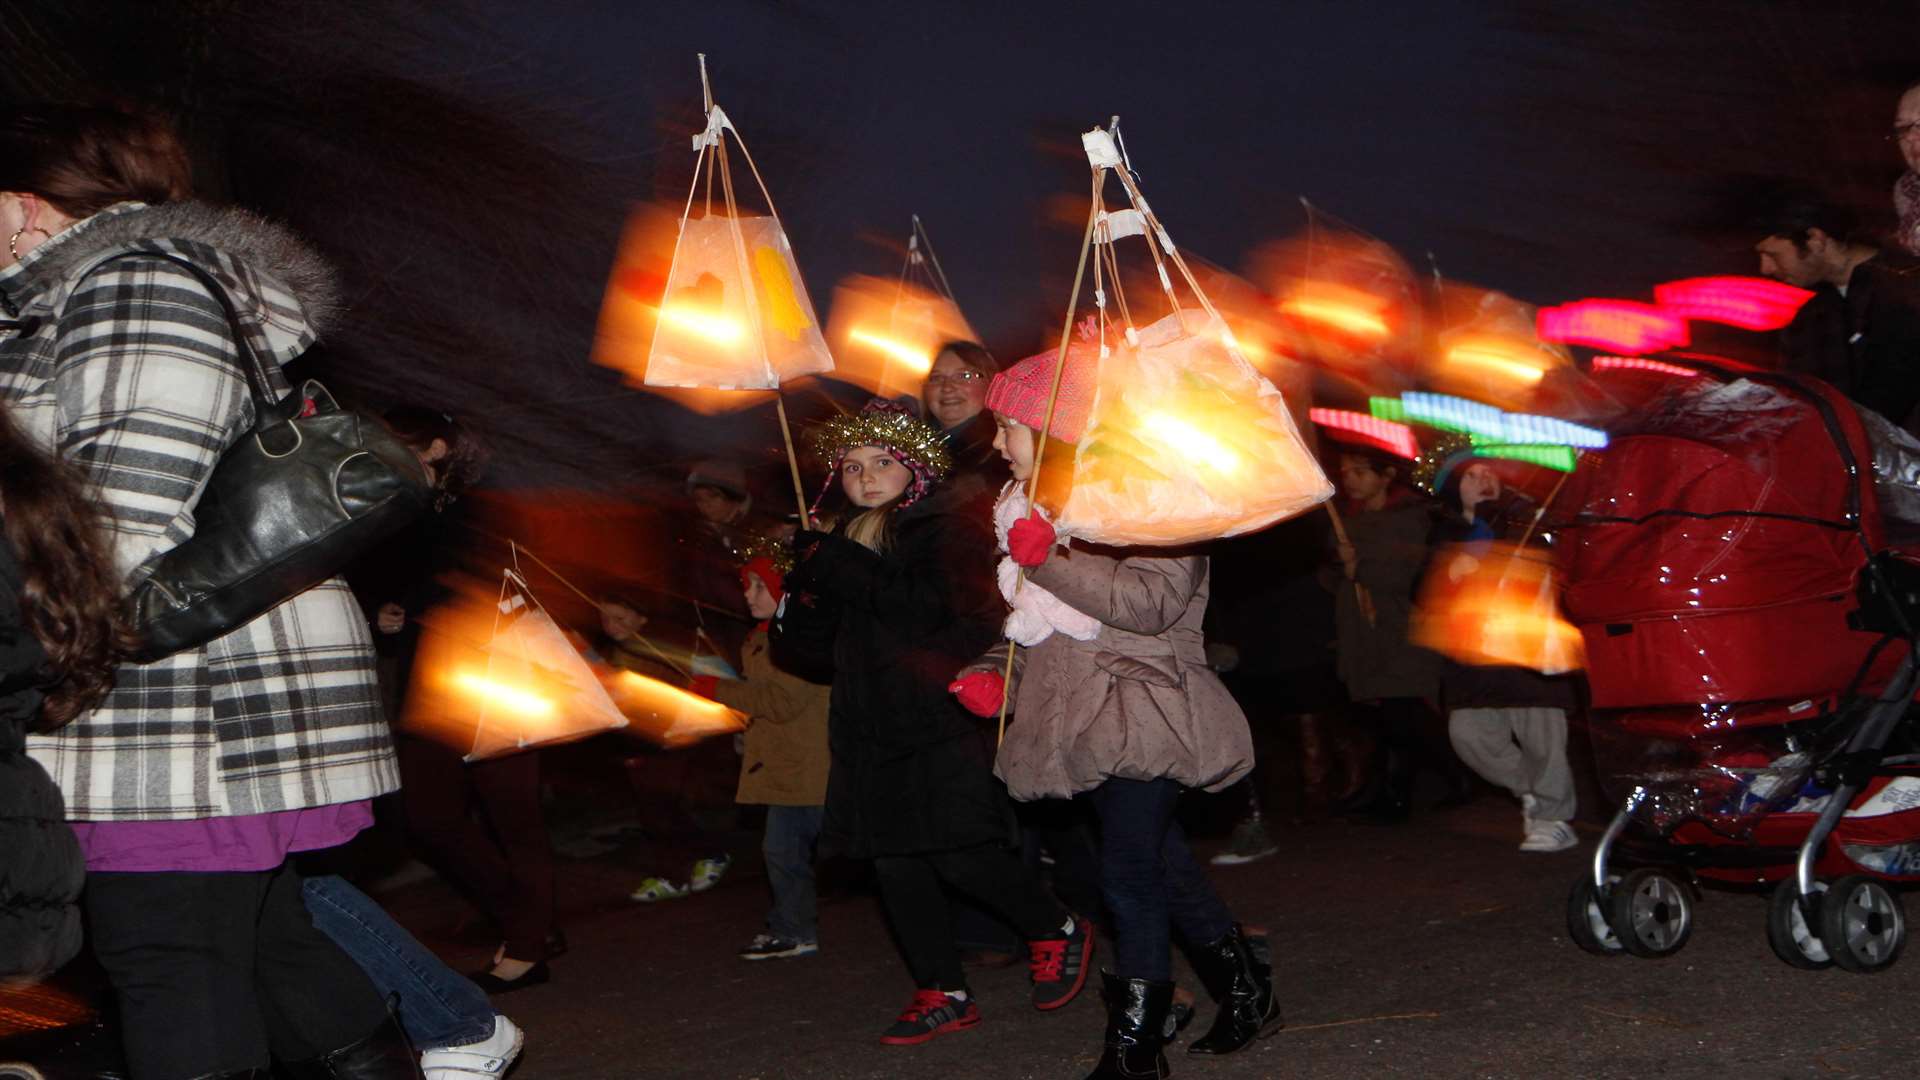 Last year's lantern parade